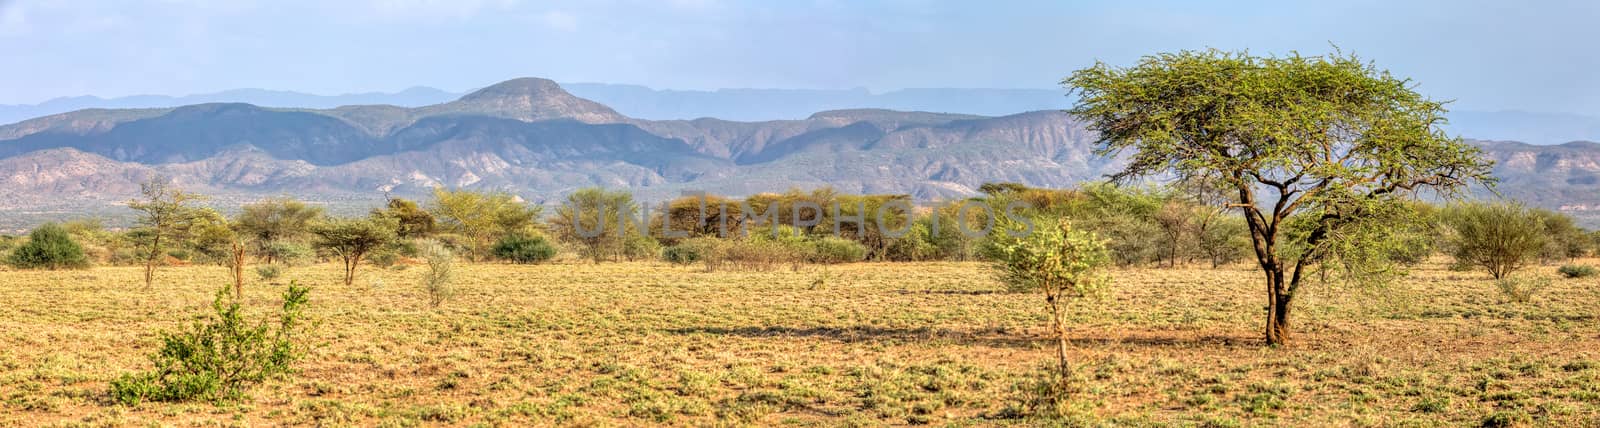 savanna in the Awash National Park, Ethiopia by artush